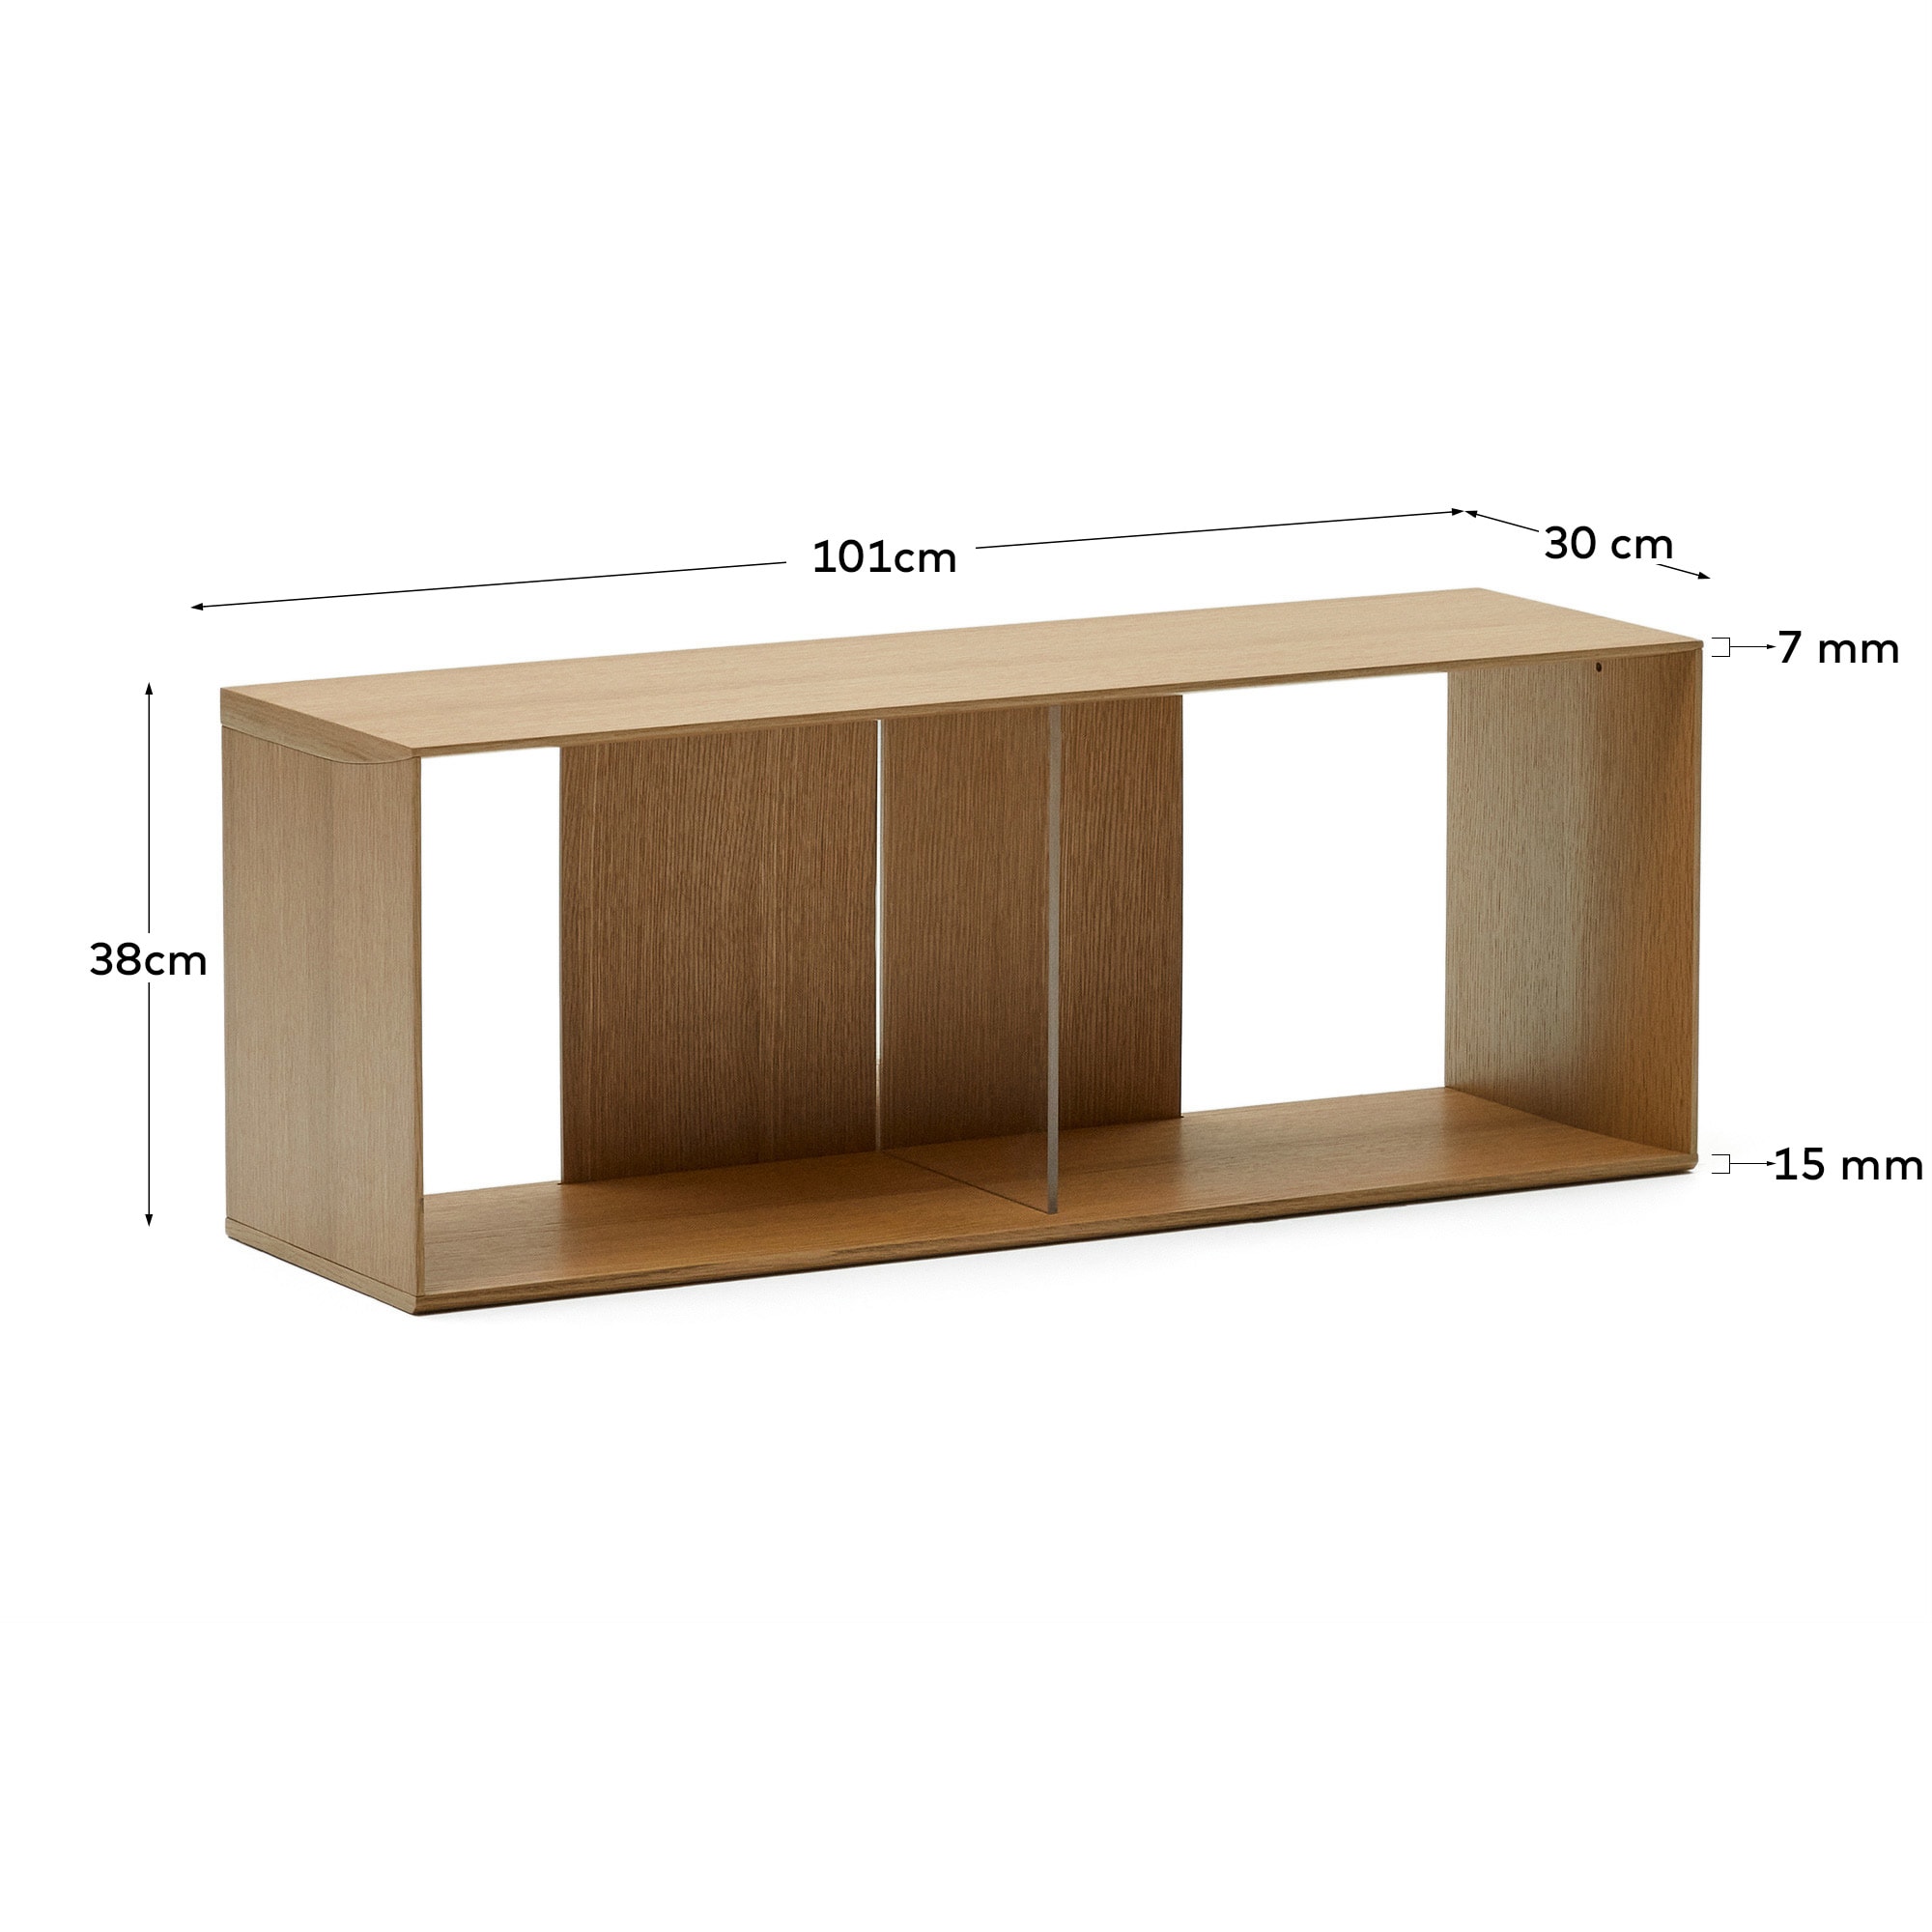 Litto set of 2 modular shelving units in oak wood veneer, 101 x 76 cm - sizes